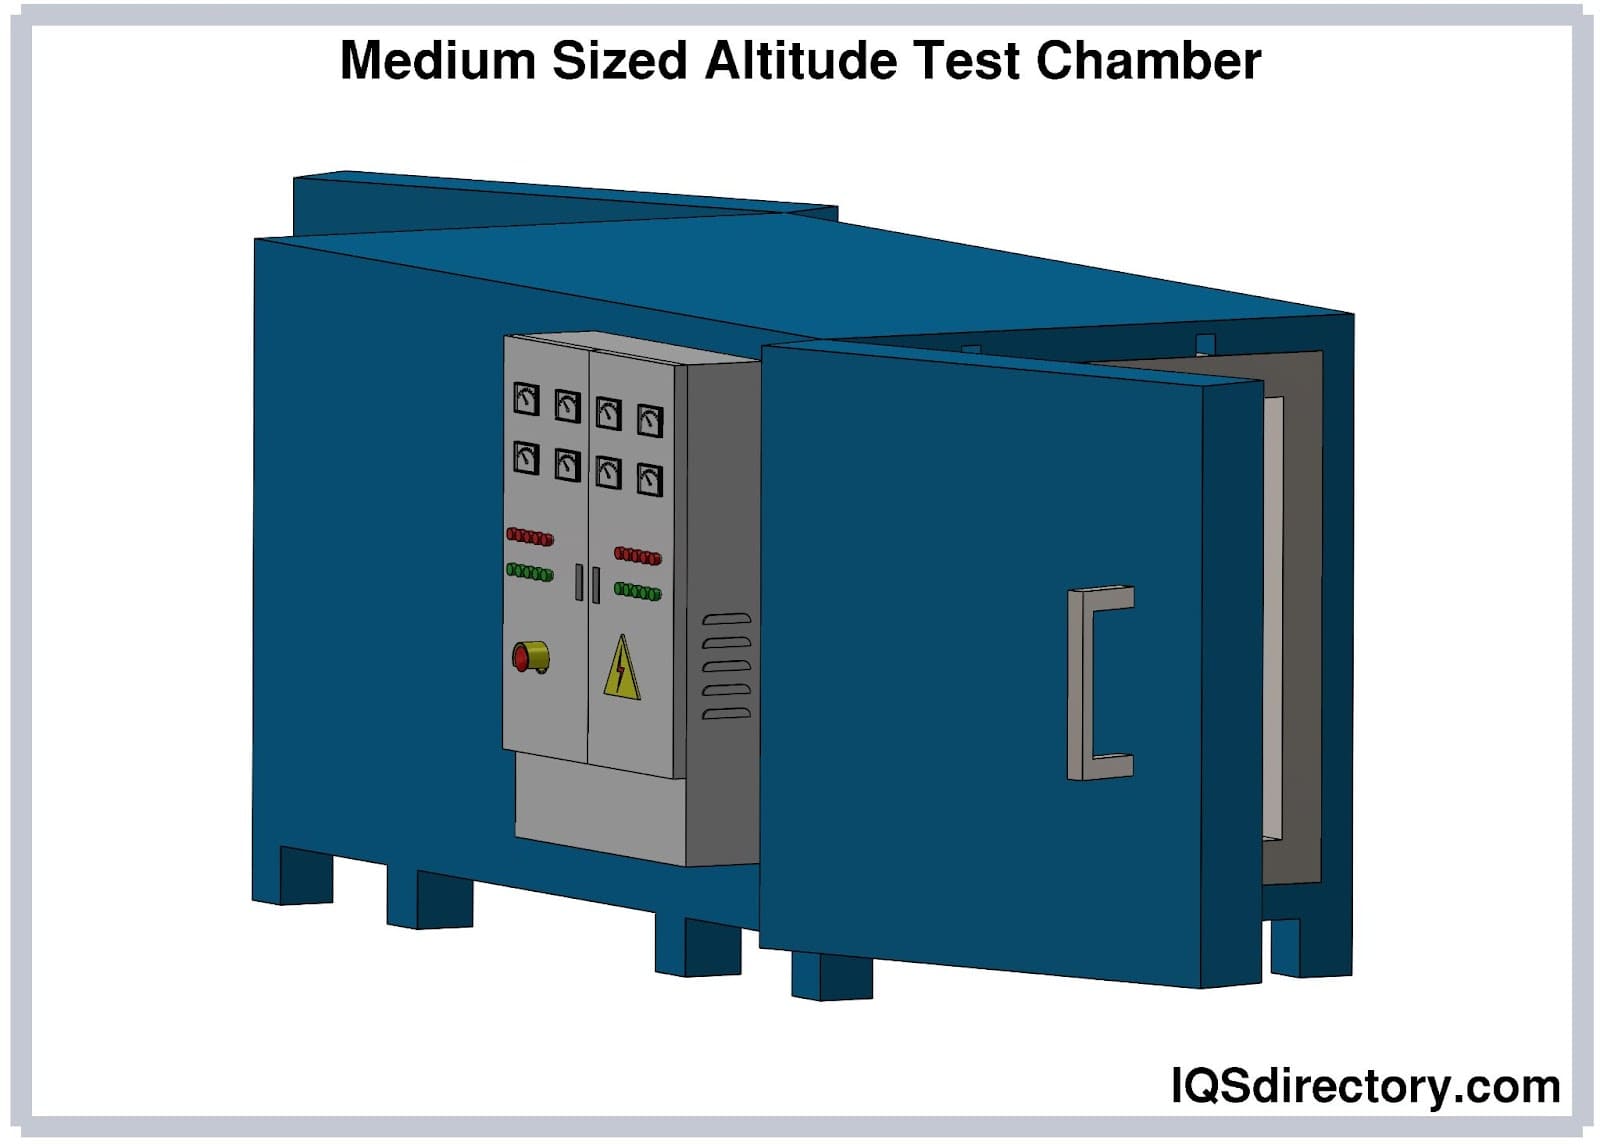 Medium Sized Altitude Test Chamber